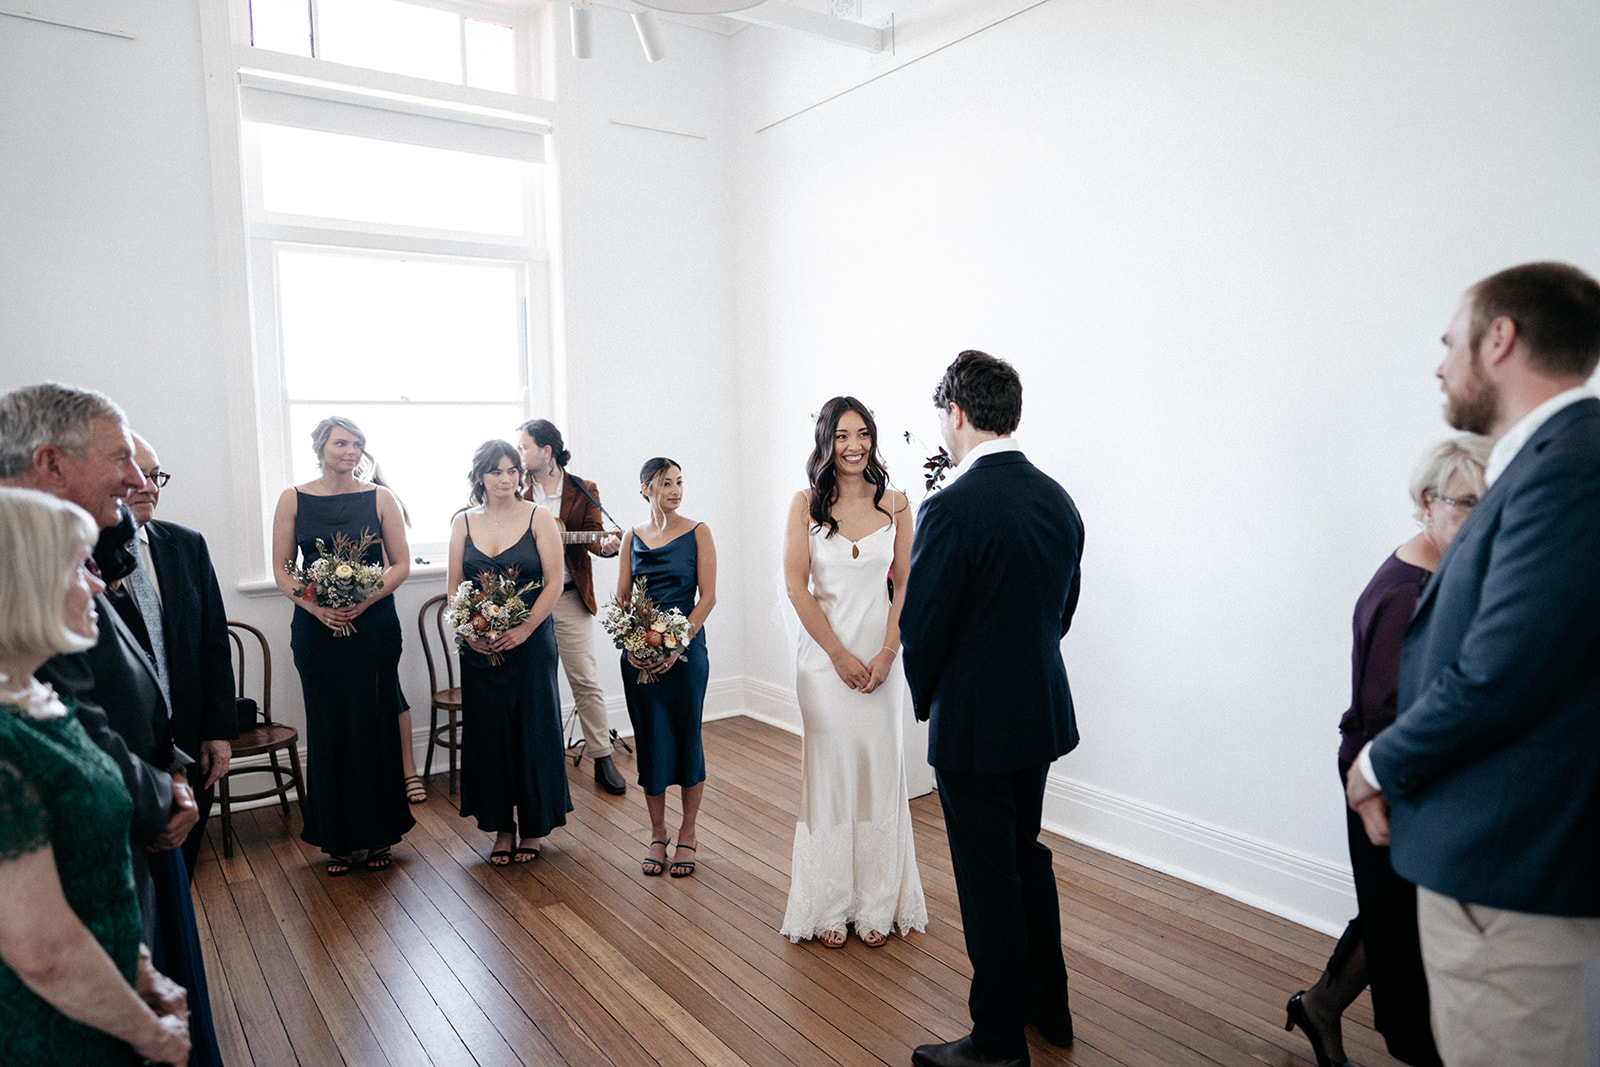 Wedding ceremony at Clifton School of Arts